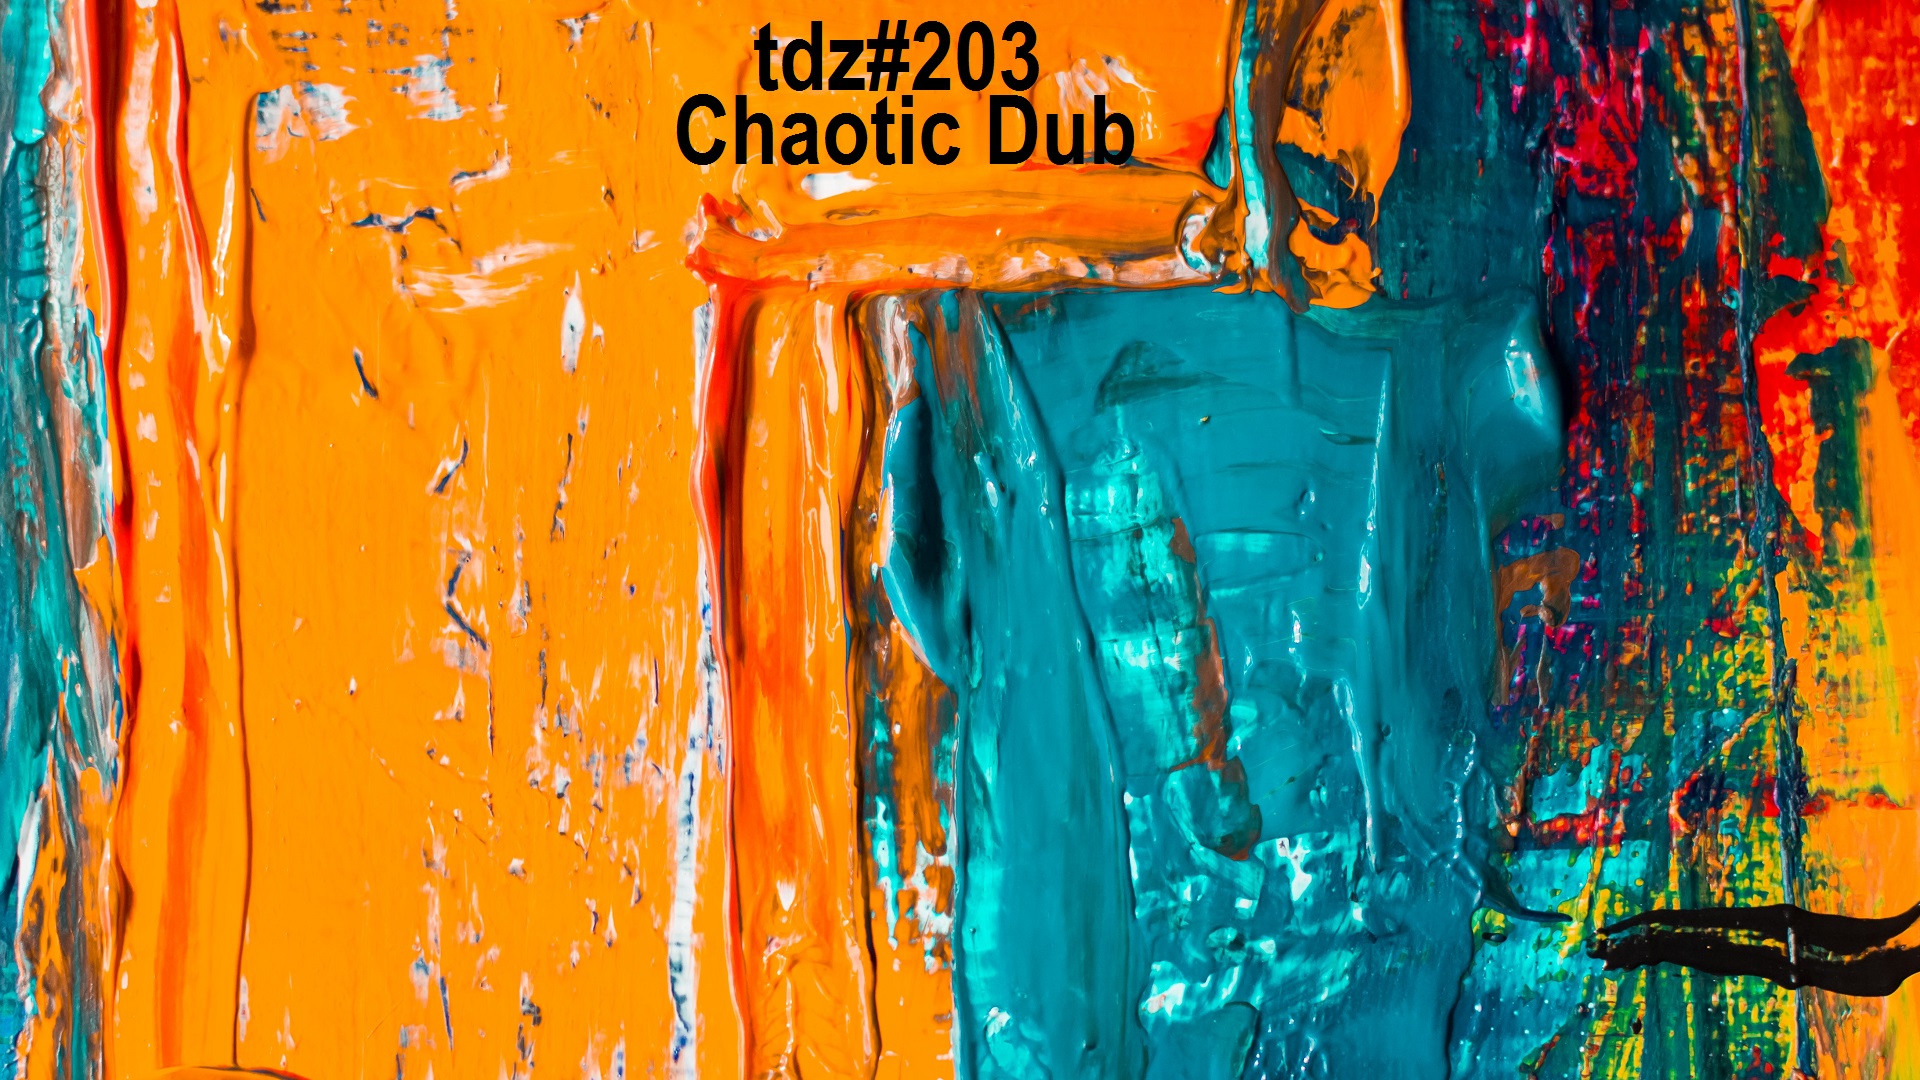 TDZ#203... Chaotic Dub.....